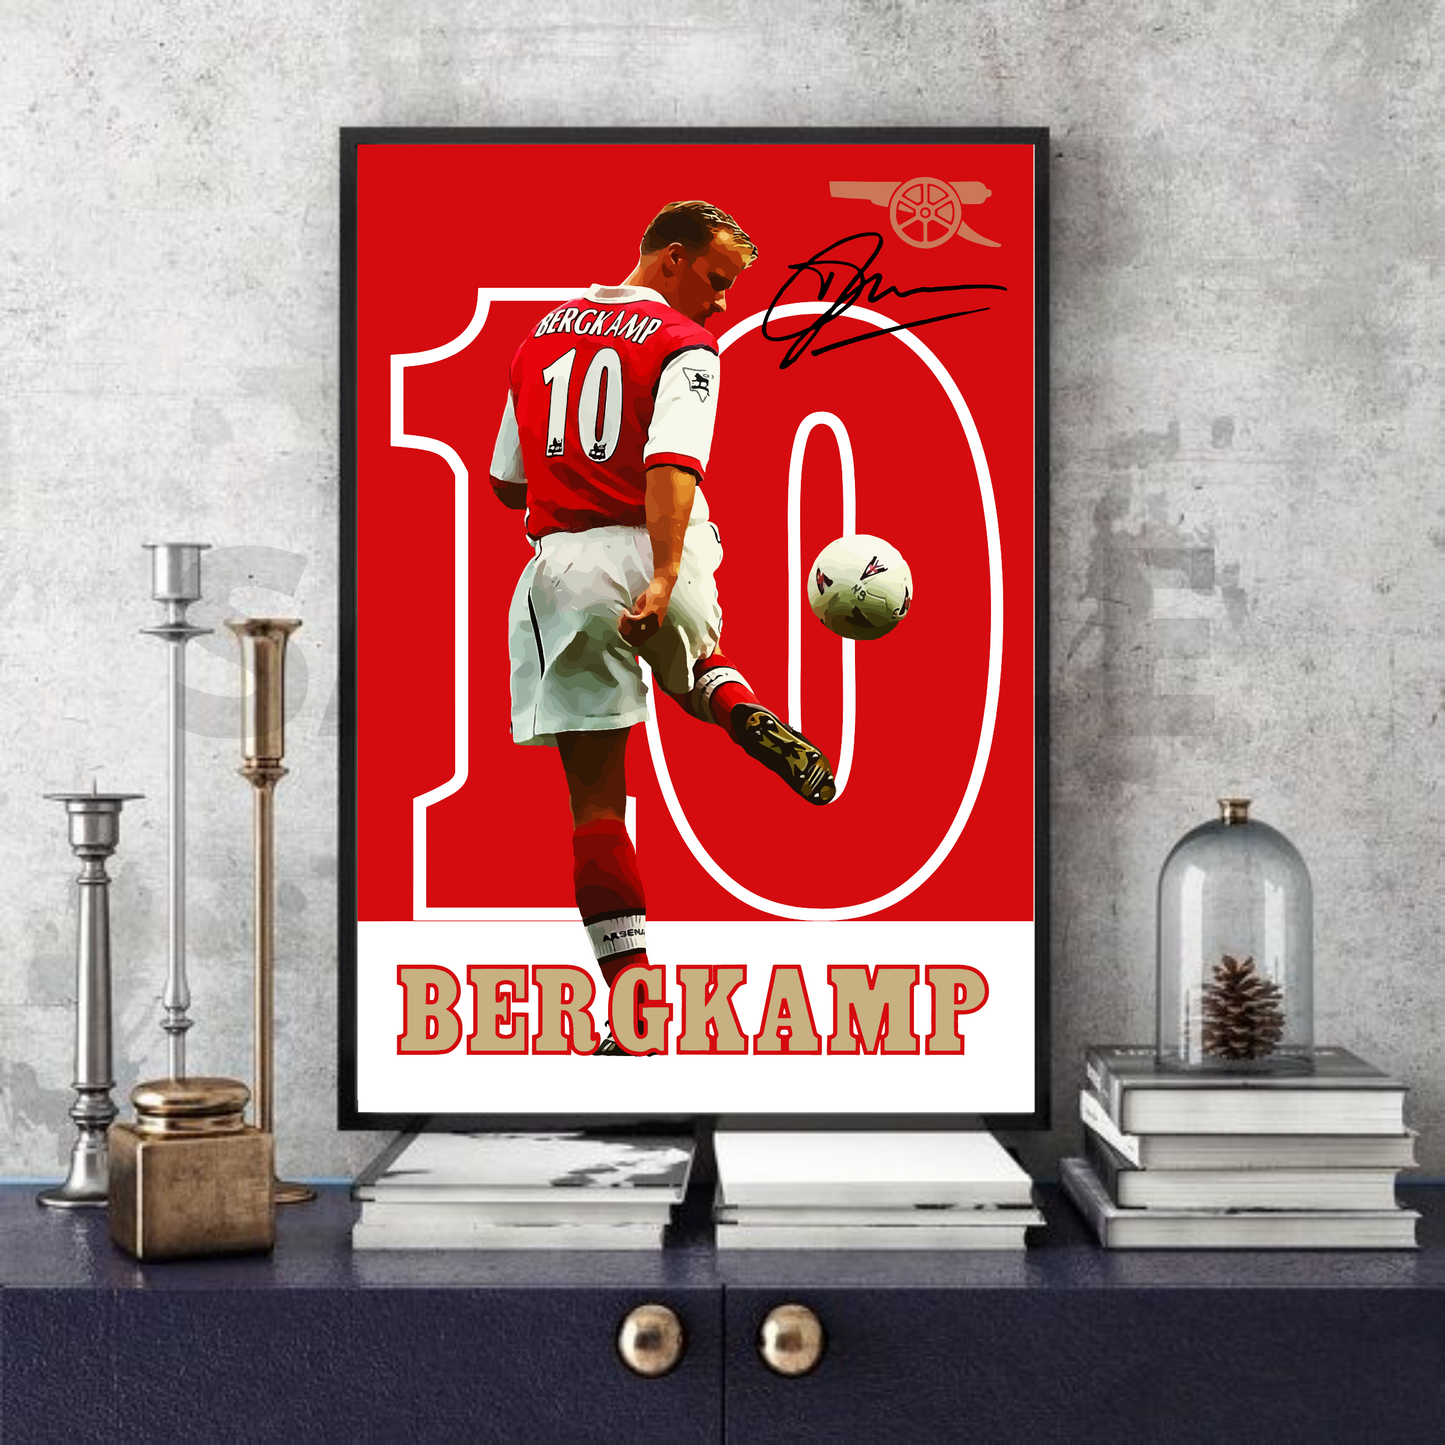 Dennis Bergkamp (Arsenal) Football Memorabilia/Collectable #68 - Signed print